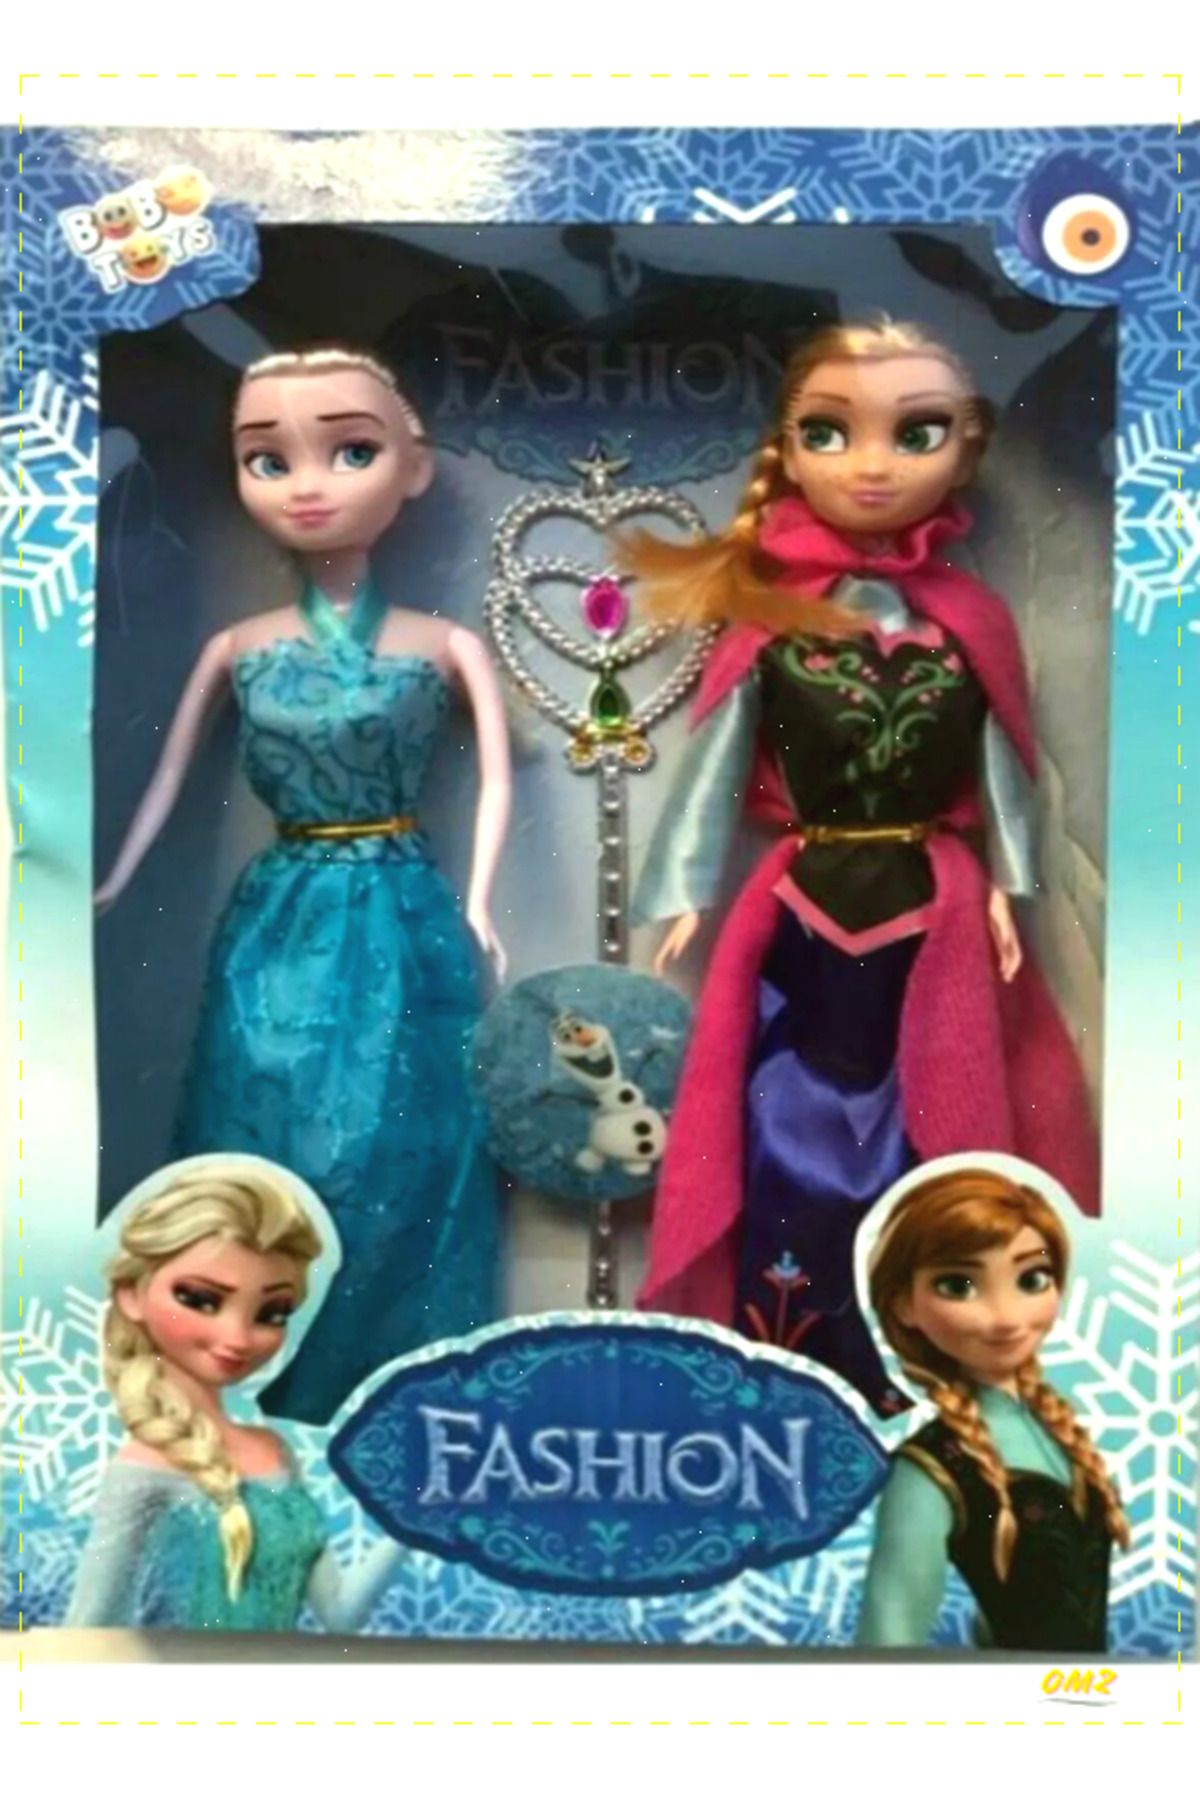 OMZ Bobo Toys Elsa Anna 2li Orta Boy Frozen Girls 26Cm Kız Erkek Cocuk Egitici Montessori Oyuncaklar